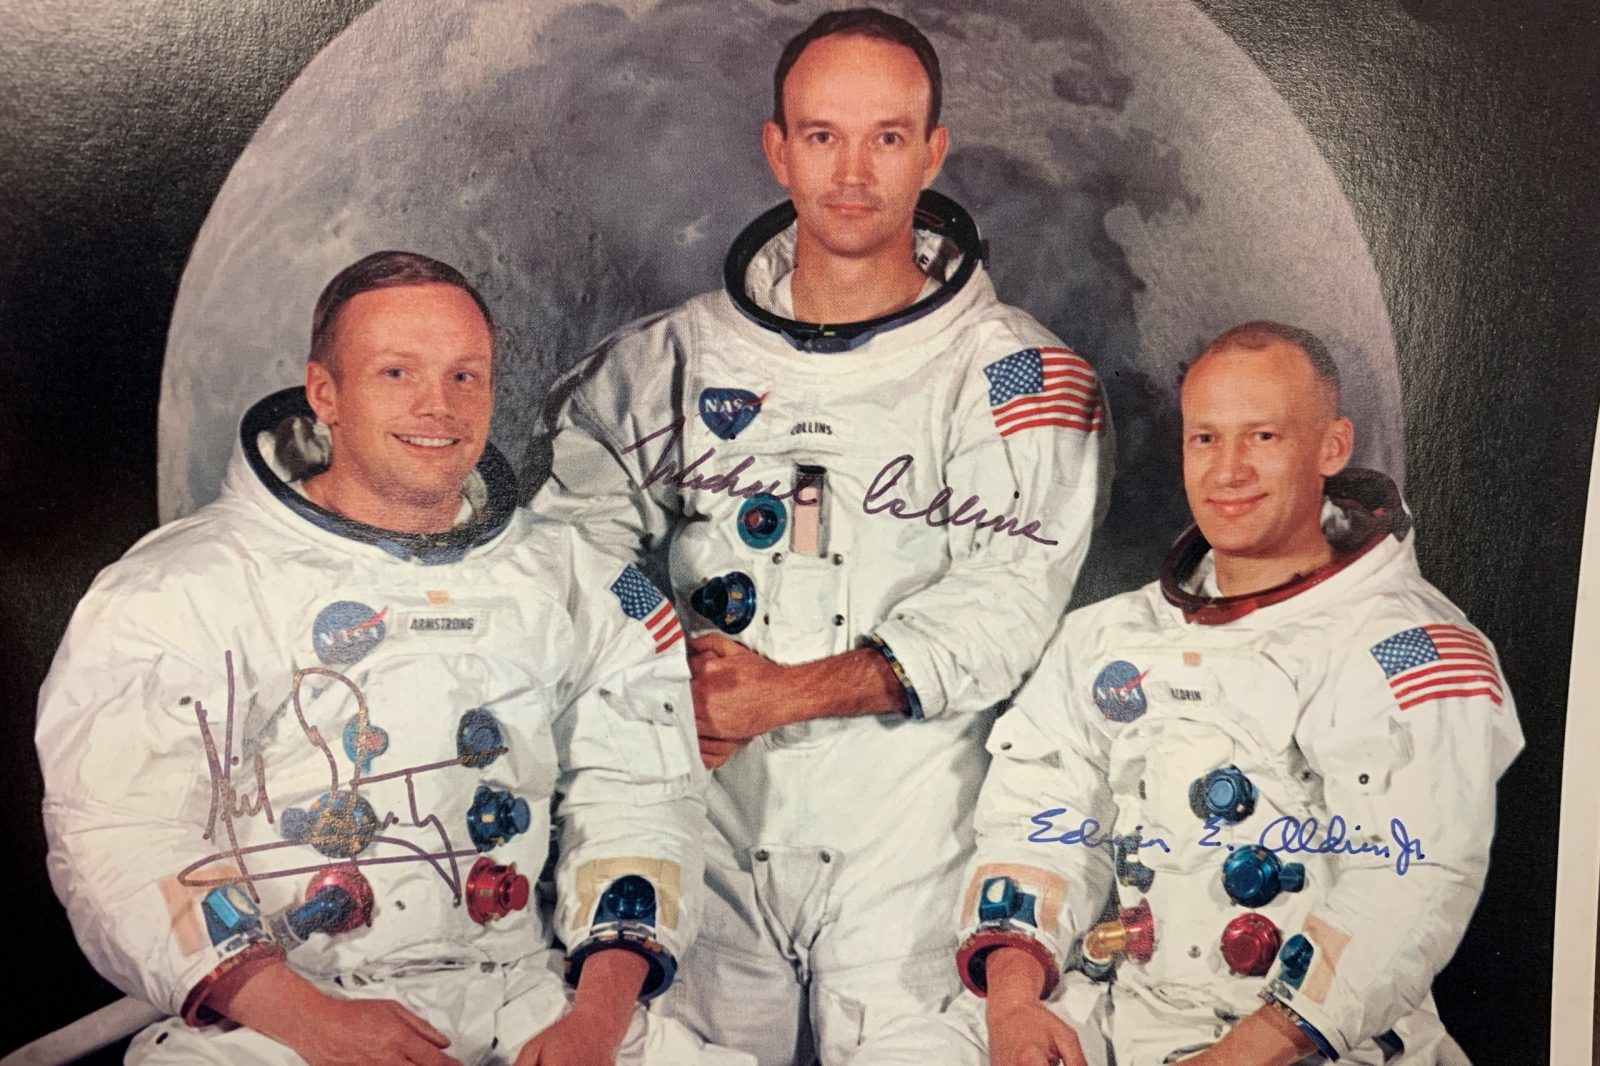 autographed photo of Apollo 11 astronauts